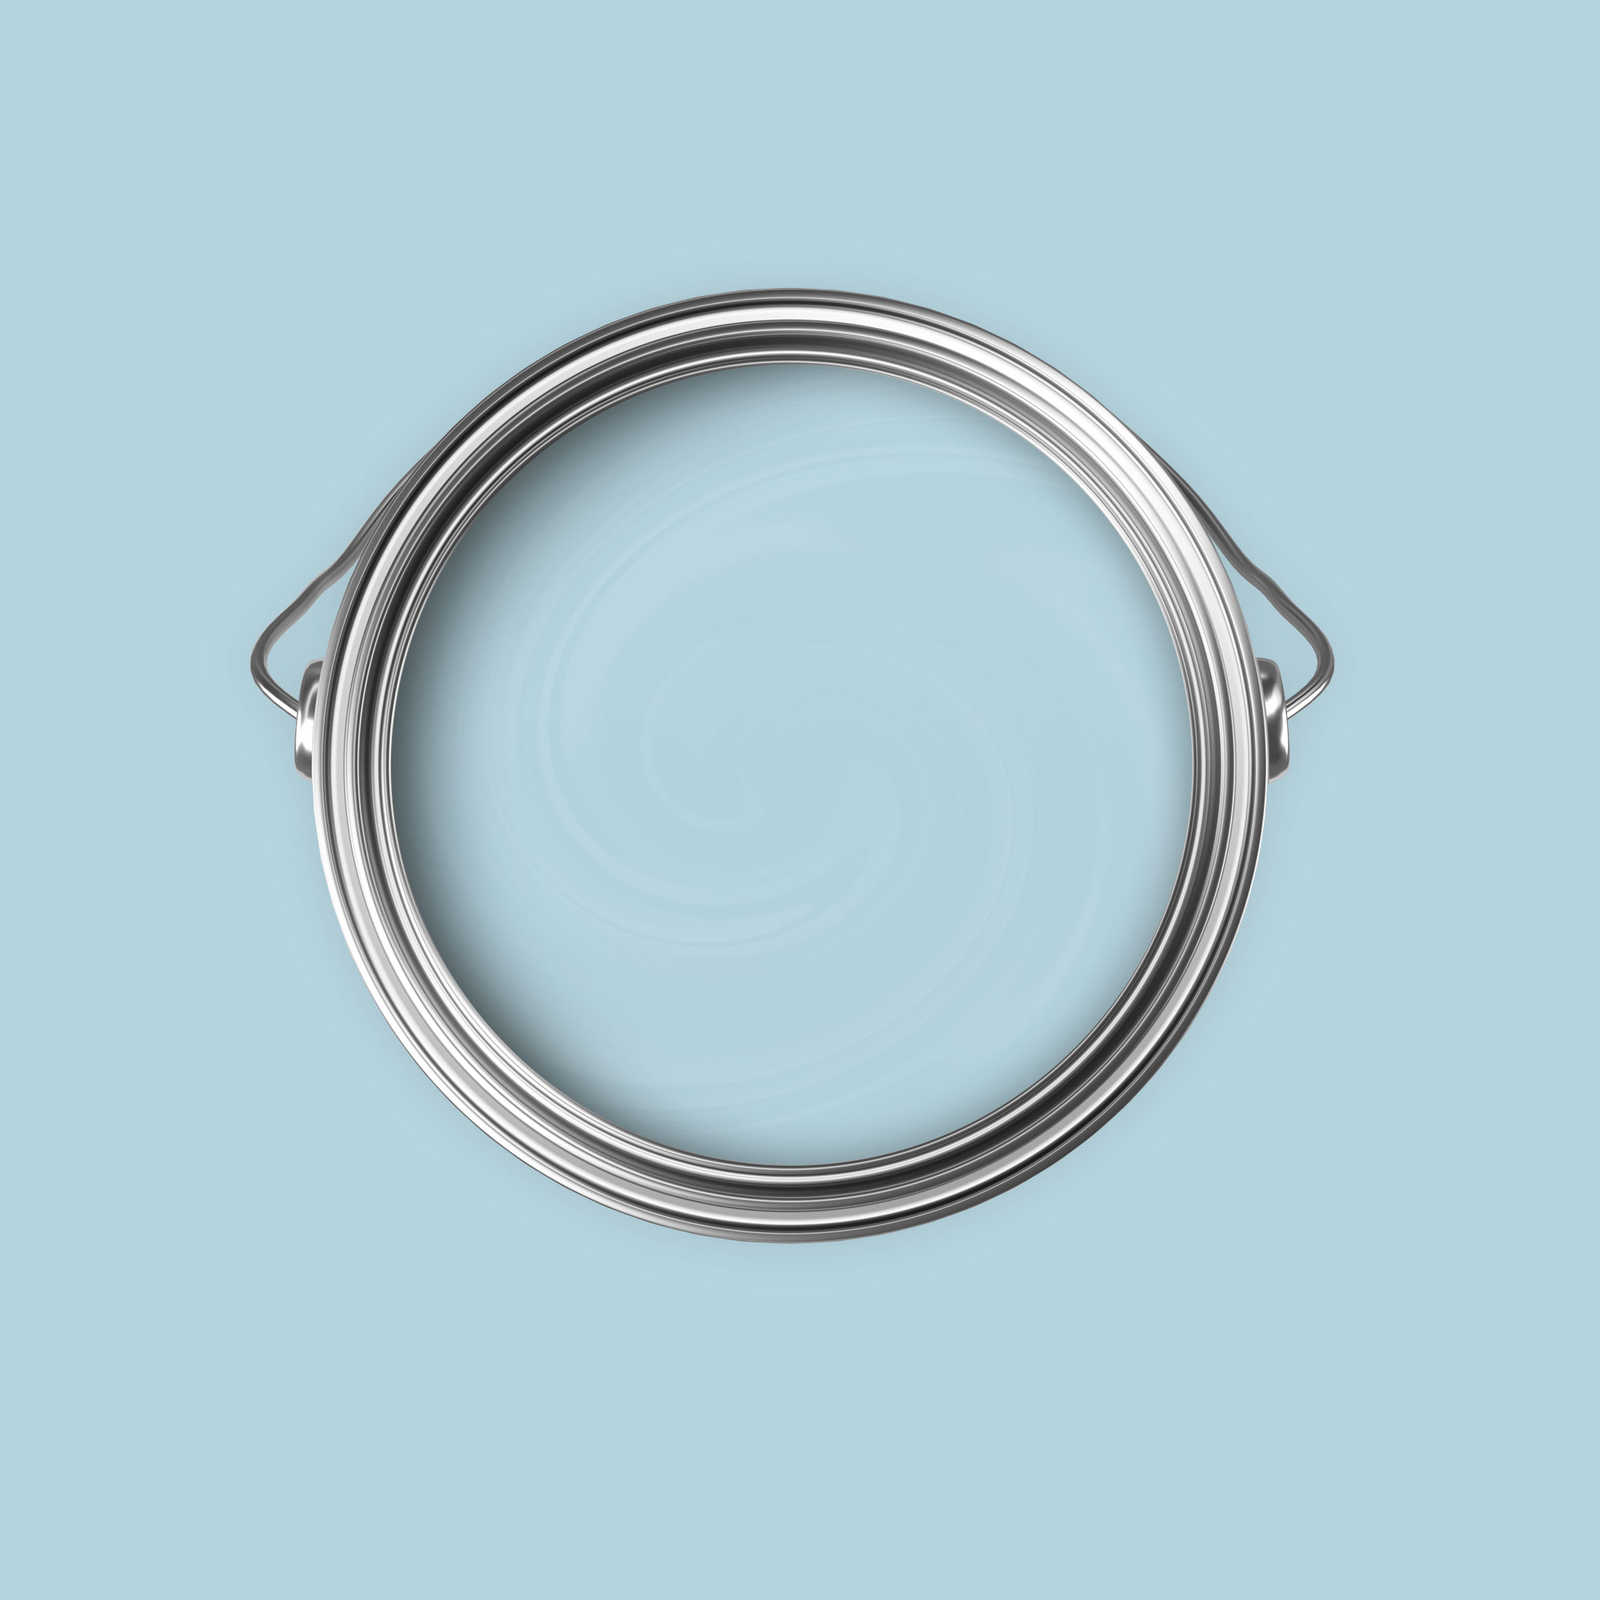             Premium Wandfarbe kühles Hellblau »Blissful Blue« NW301 – 5 Liter
        